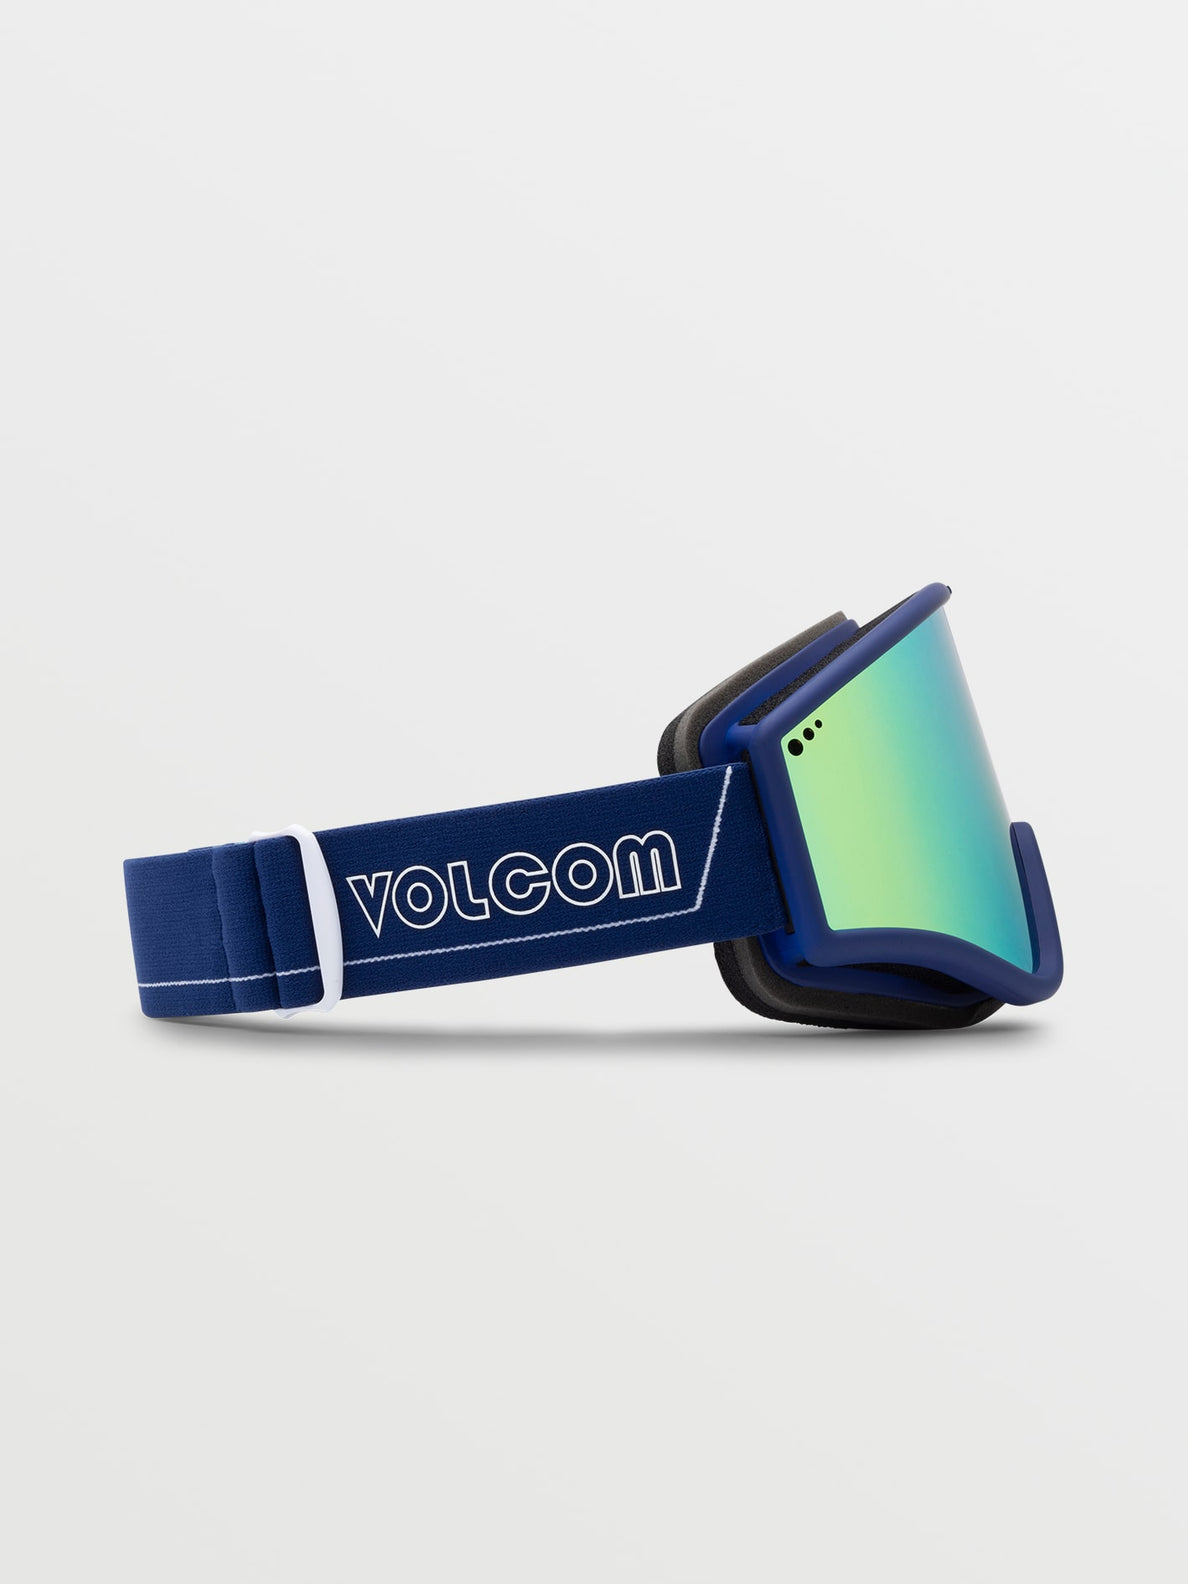 Yae Goggle with Bonus Lens - Dark Blue / Gold Chrome